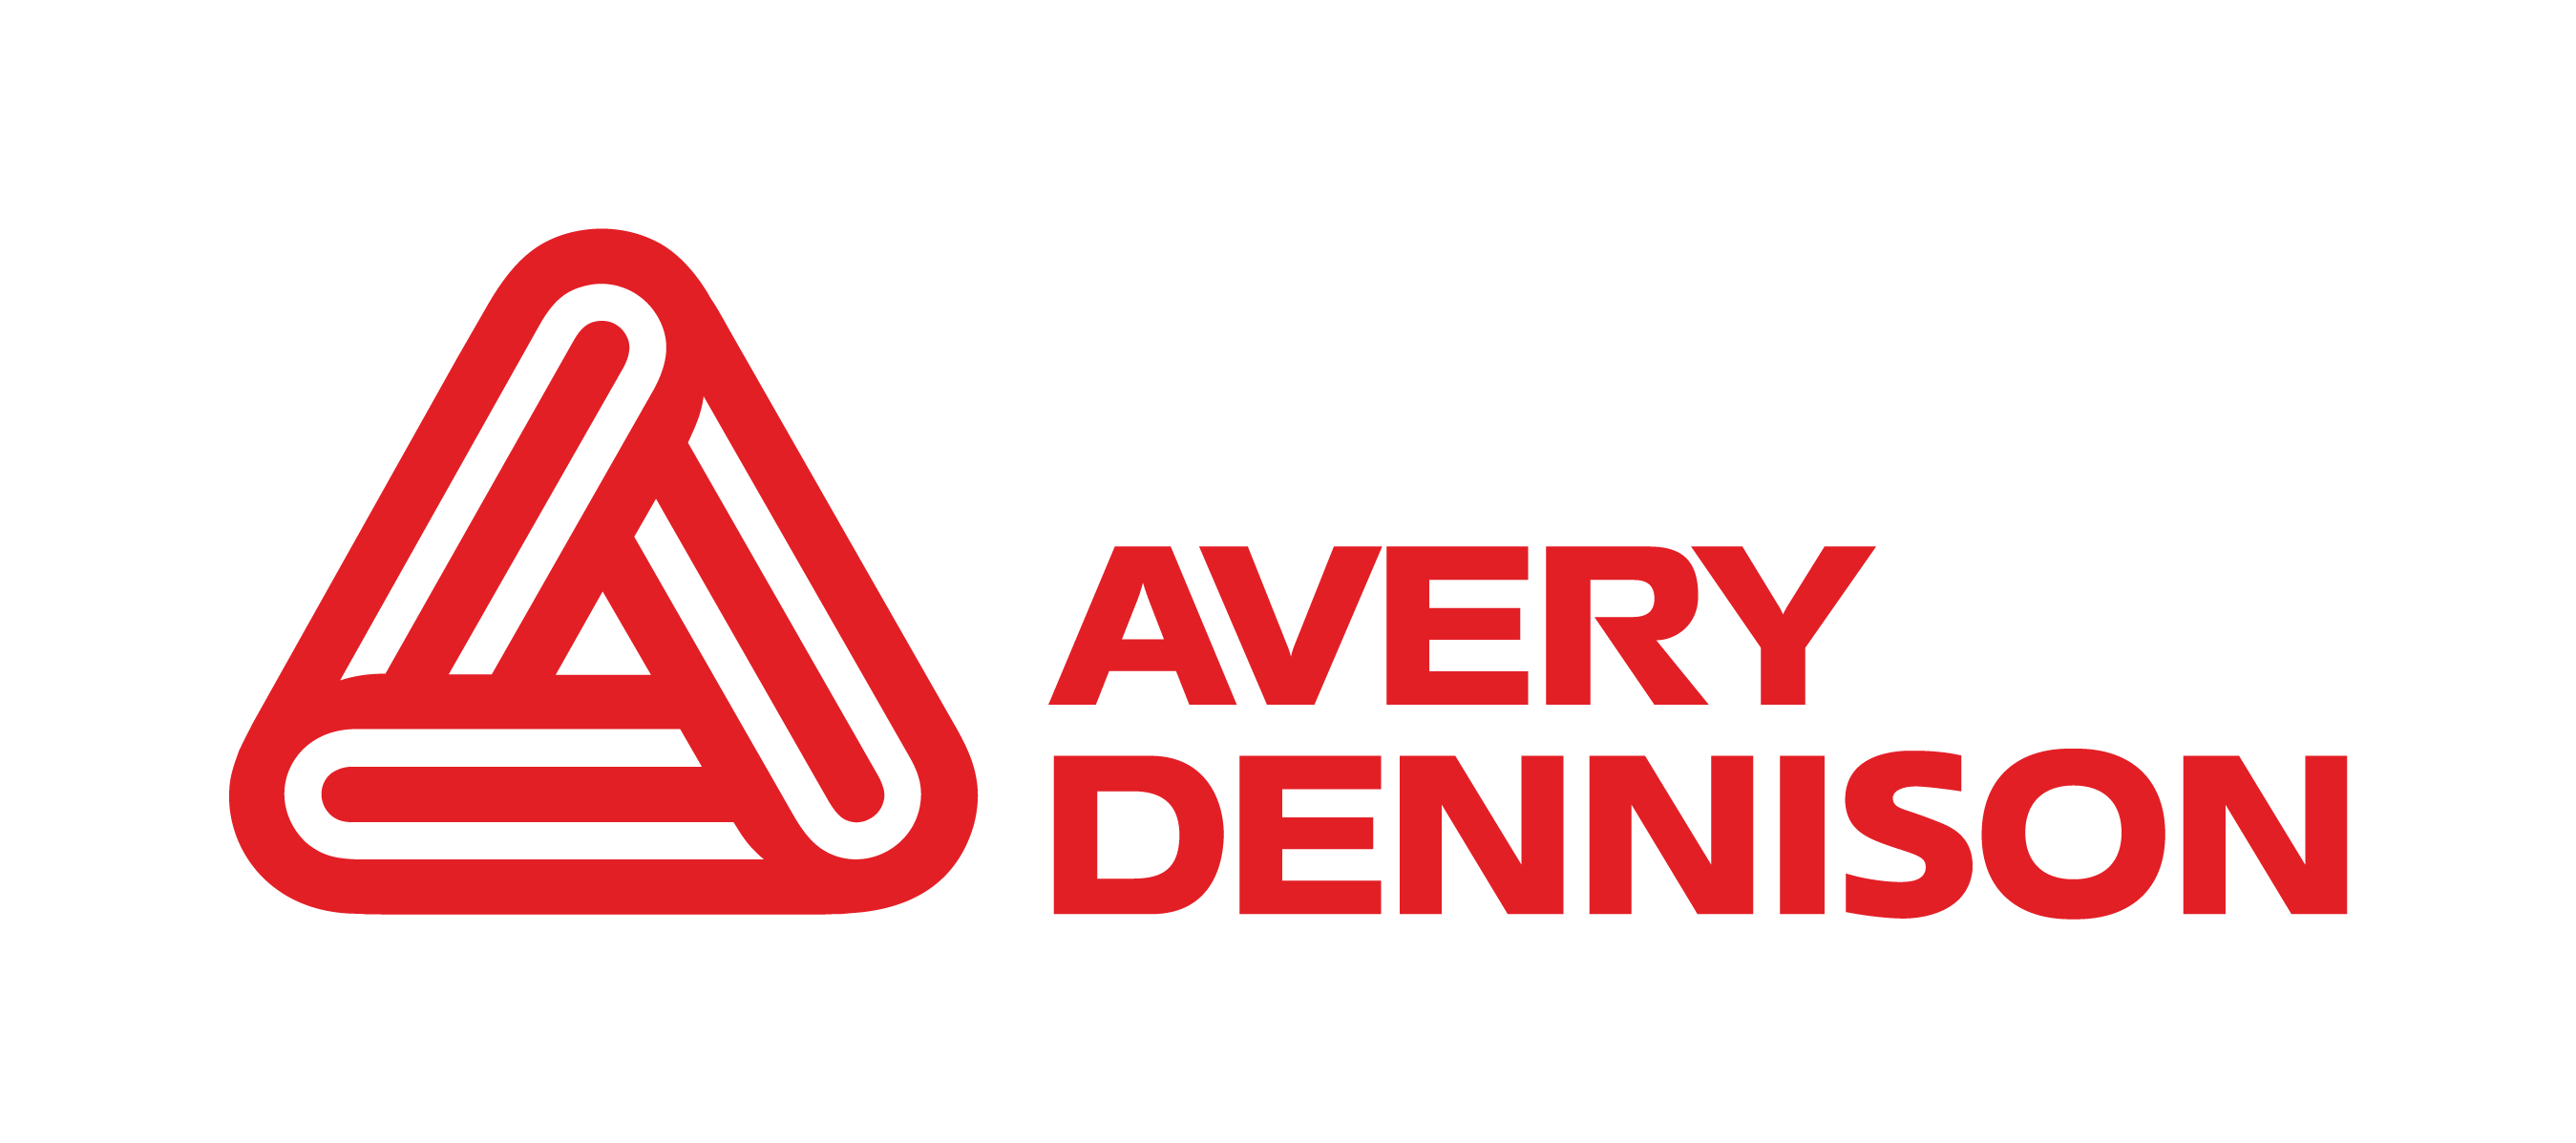 Avery Dennison Soignies